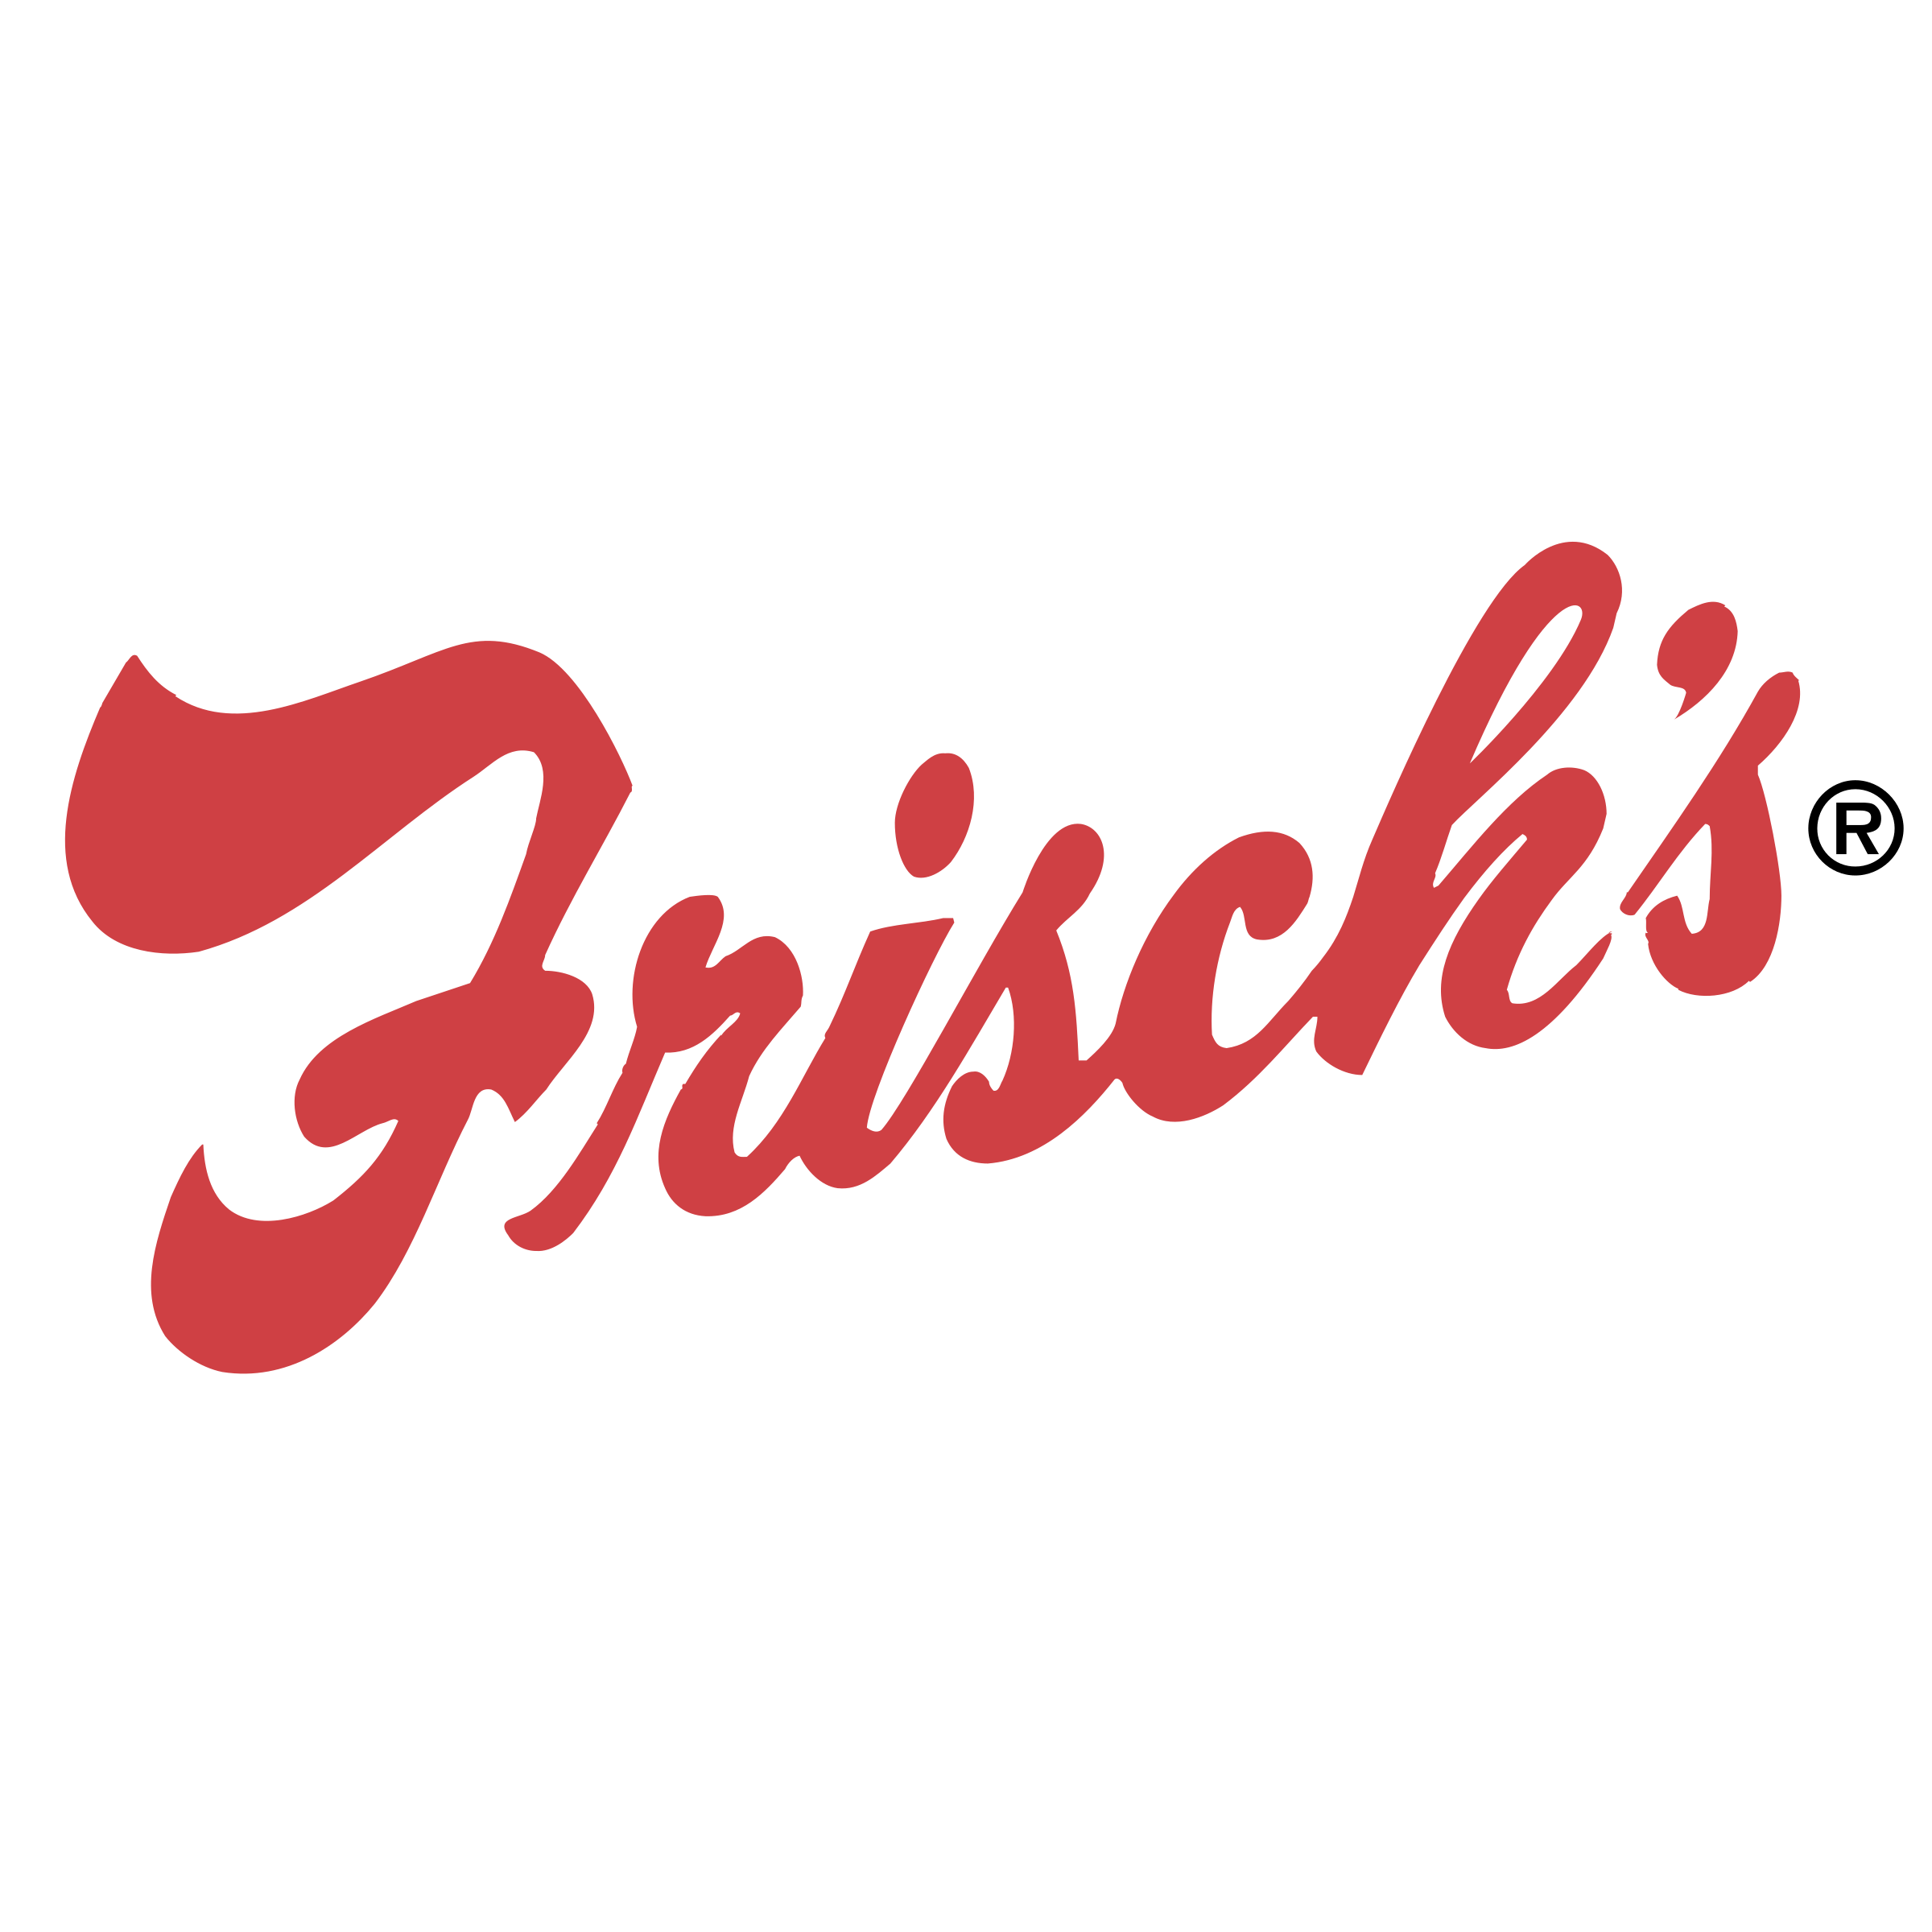 Frisch's Logo - Frisch's Restaurants Logo PNG Transparent & SVG Vector - Freebie Supply